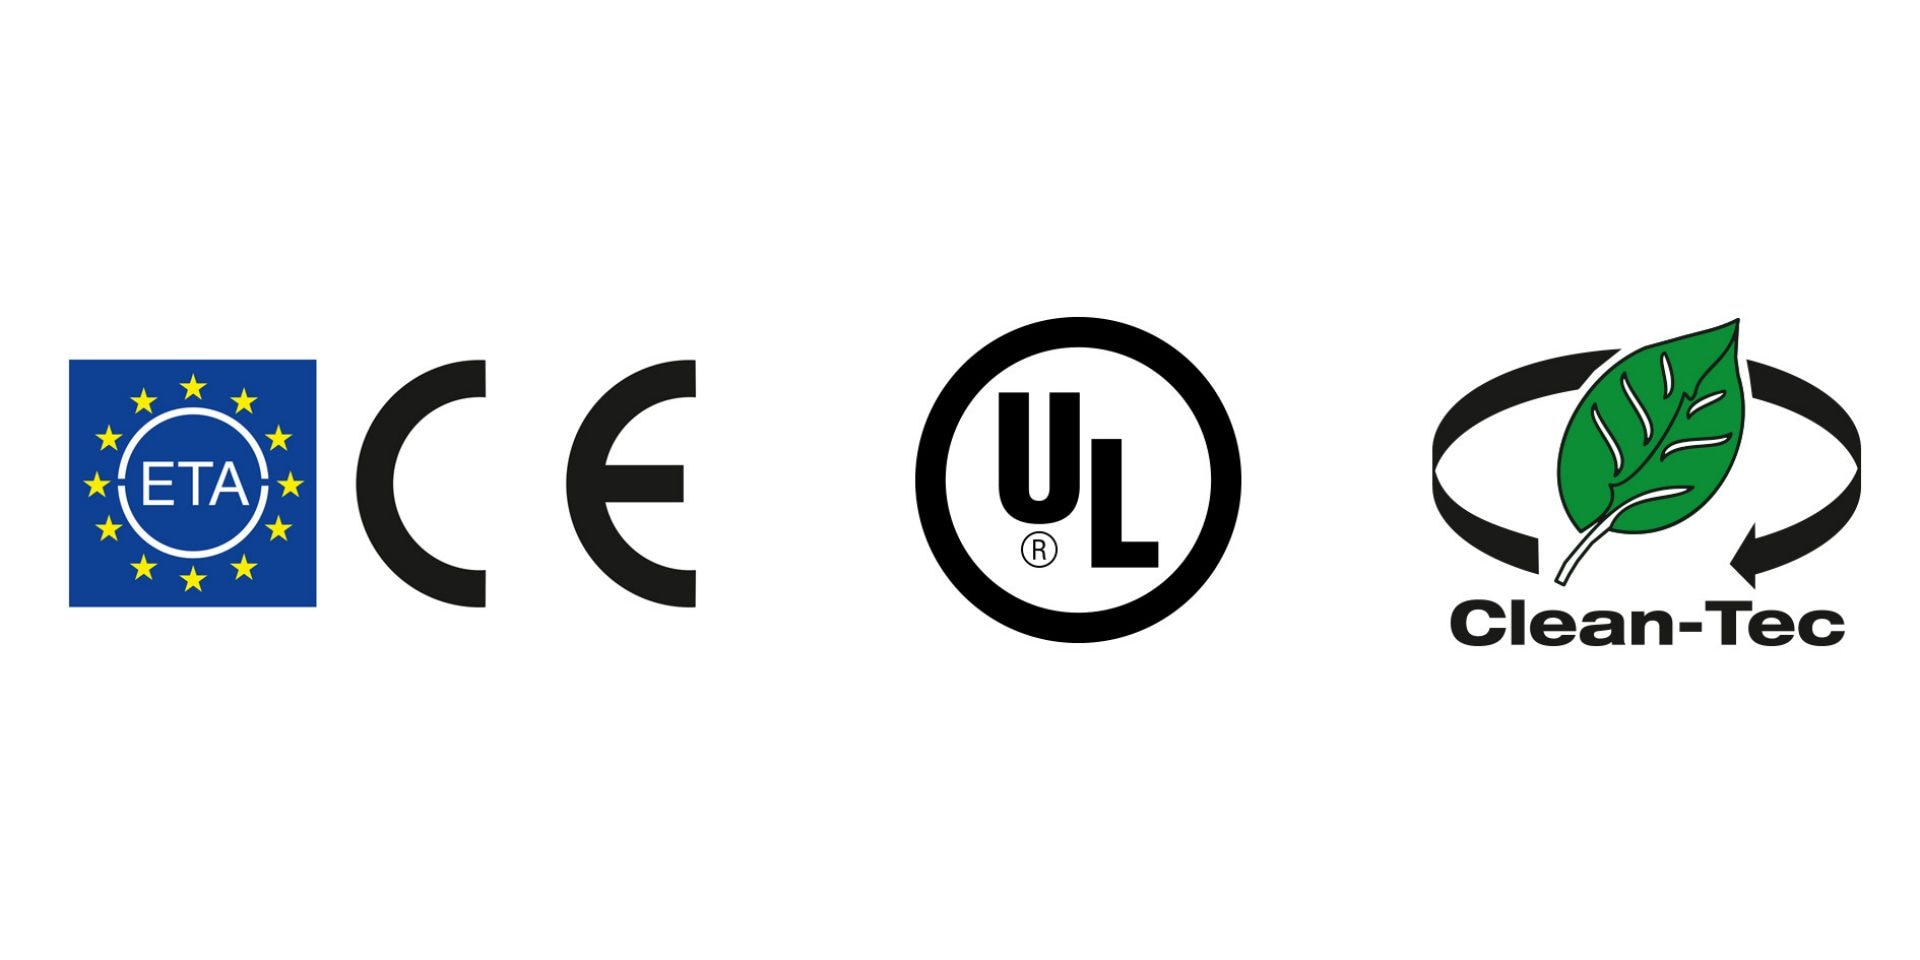 Logos for ETA and CE approval, plus the Hilti Clean-Tec logo.